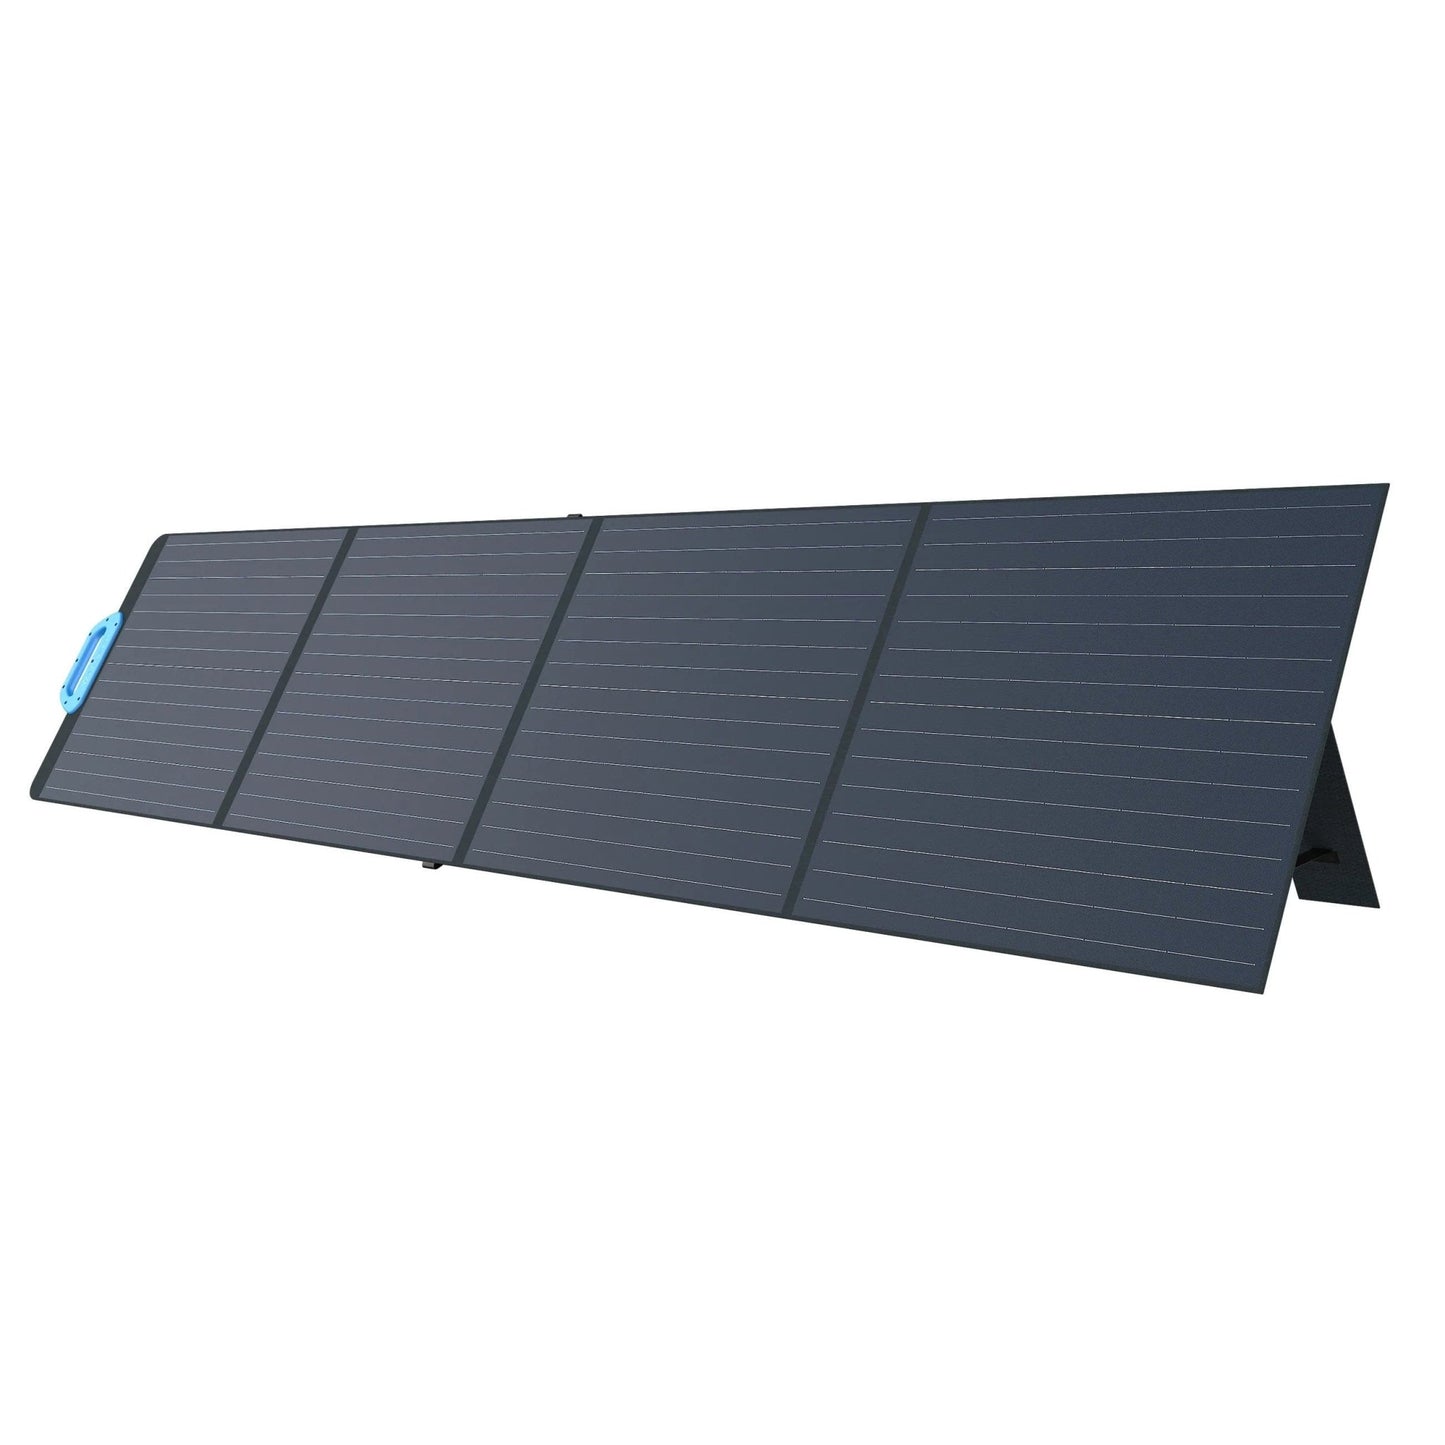 BLUETTI| D050S + 3*PV200 + 1*B300 | Solar Generator Kit-EcoPowerit